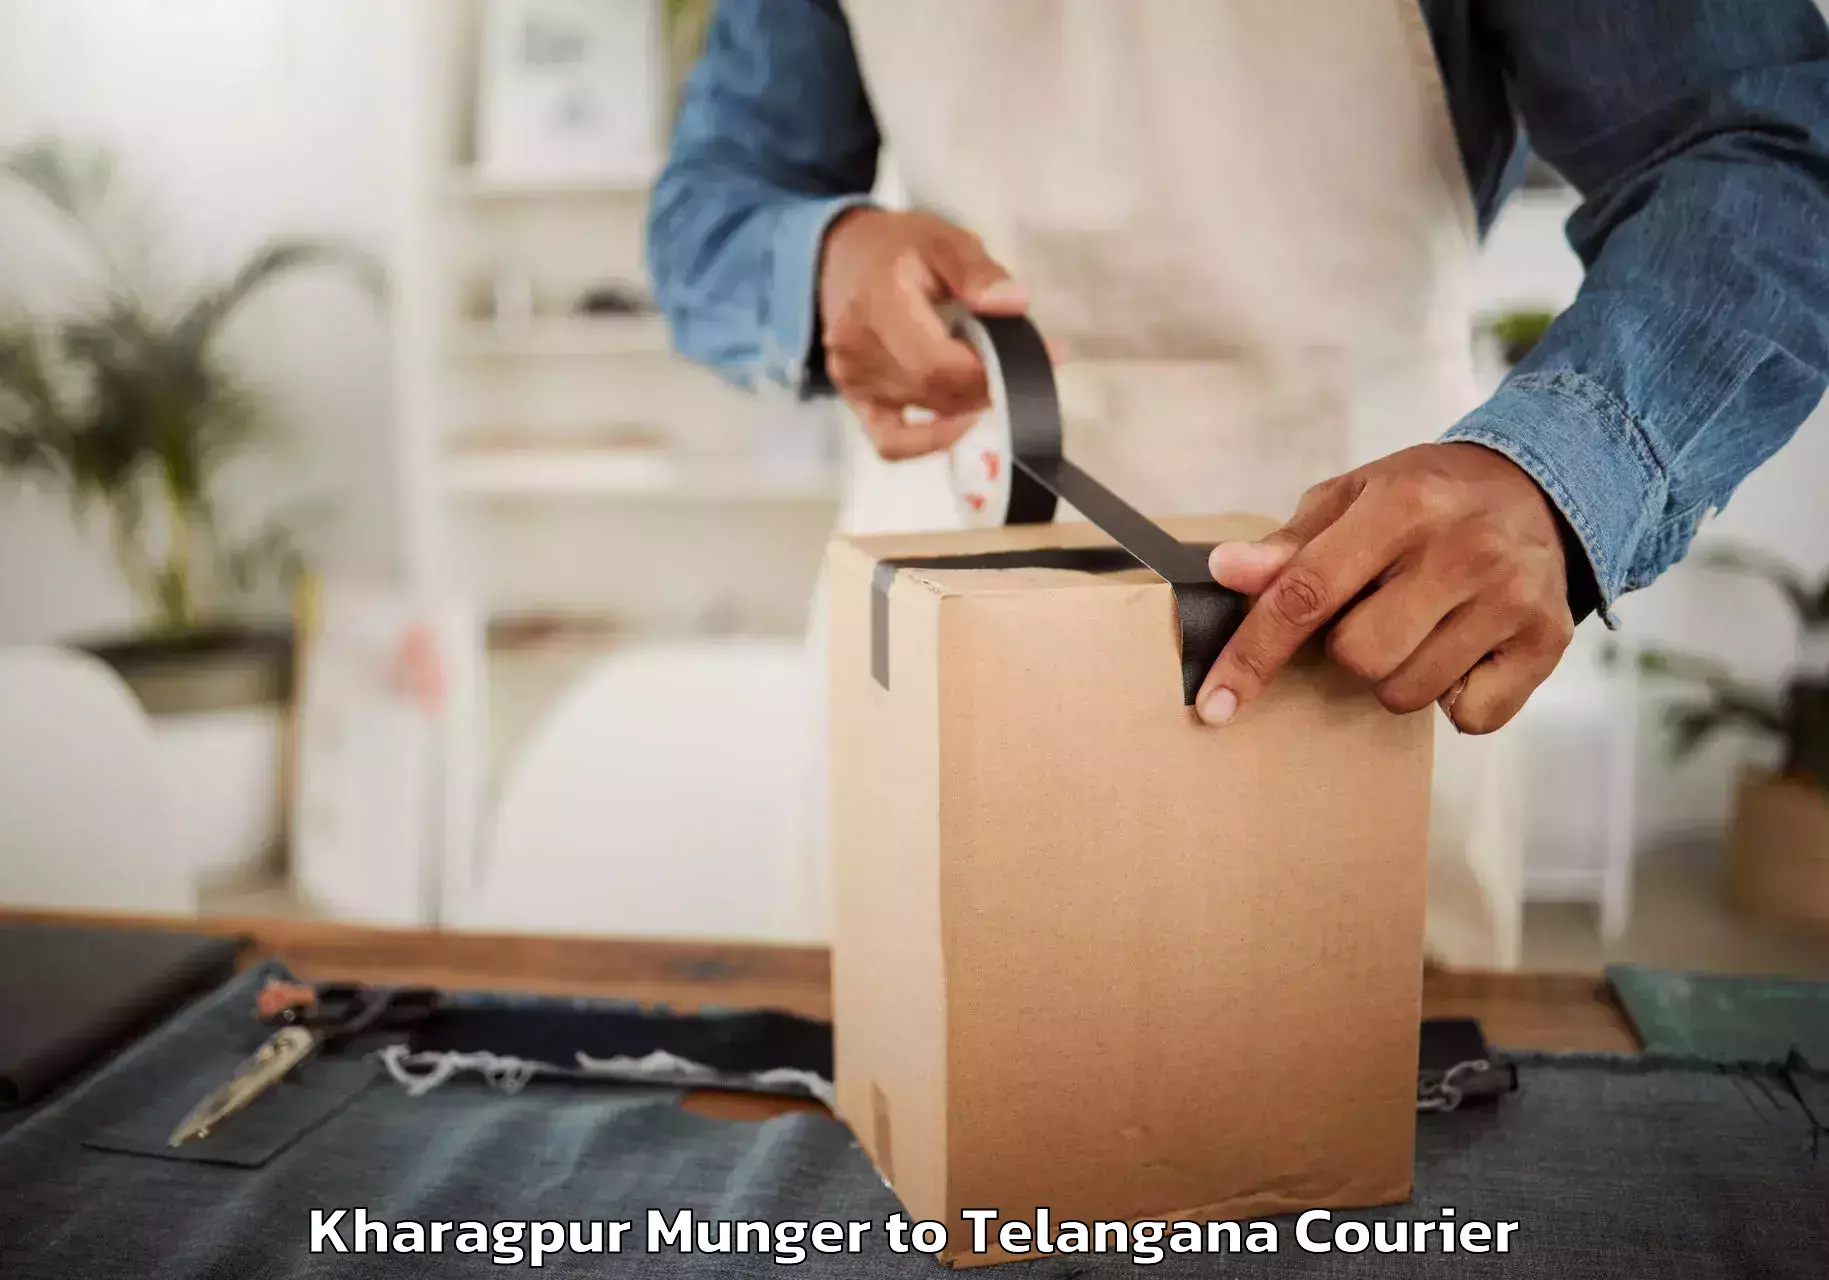 Furniture transport specialists Kharagpur Munger to Dubbak